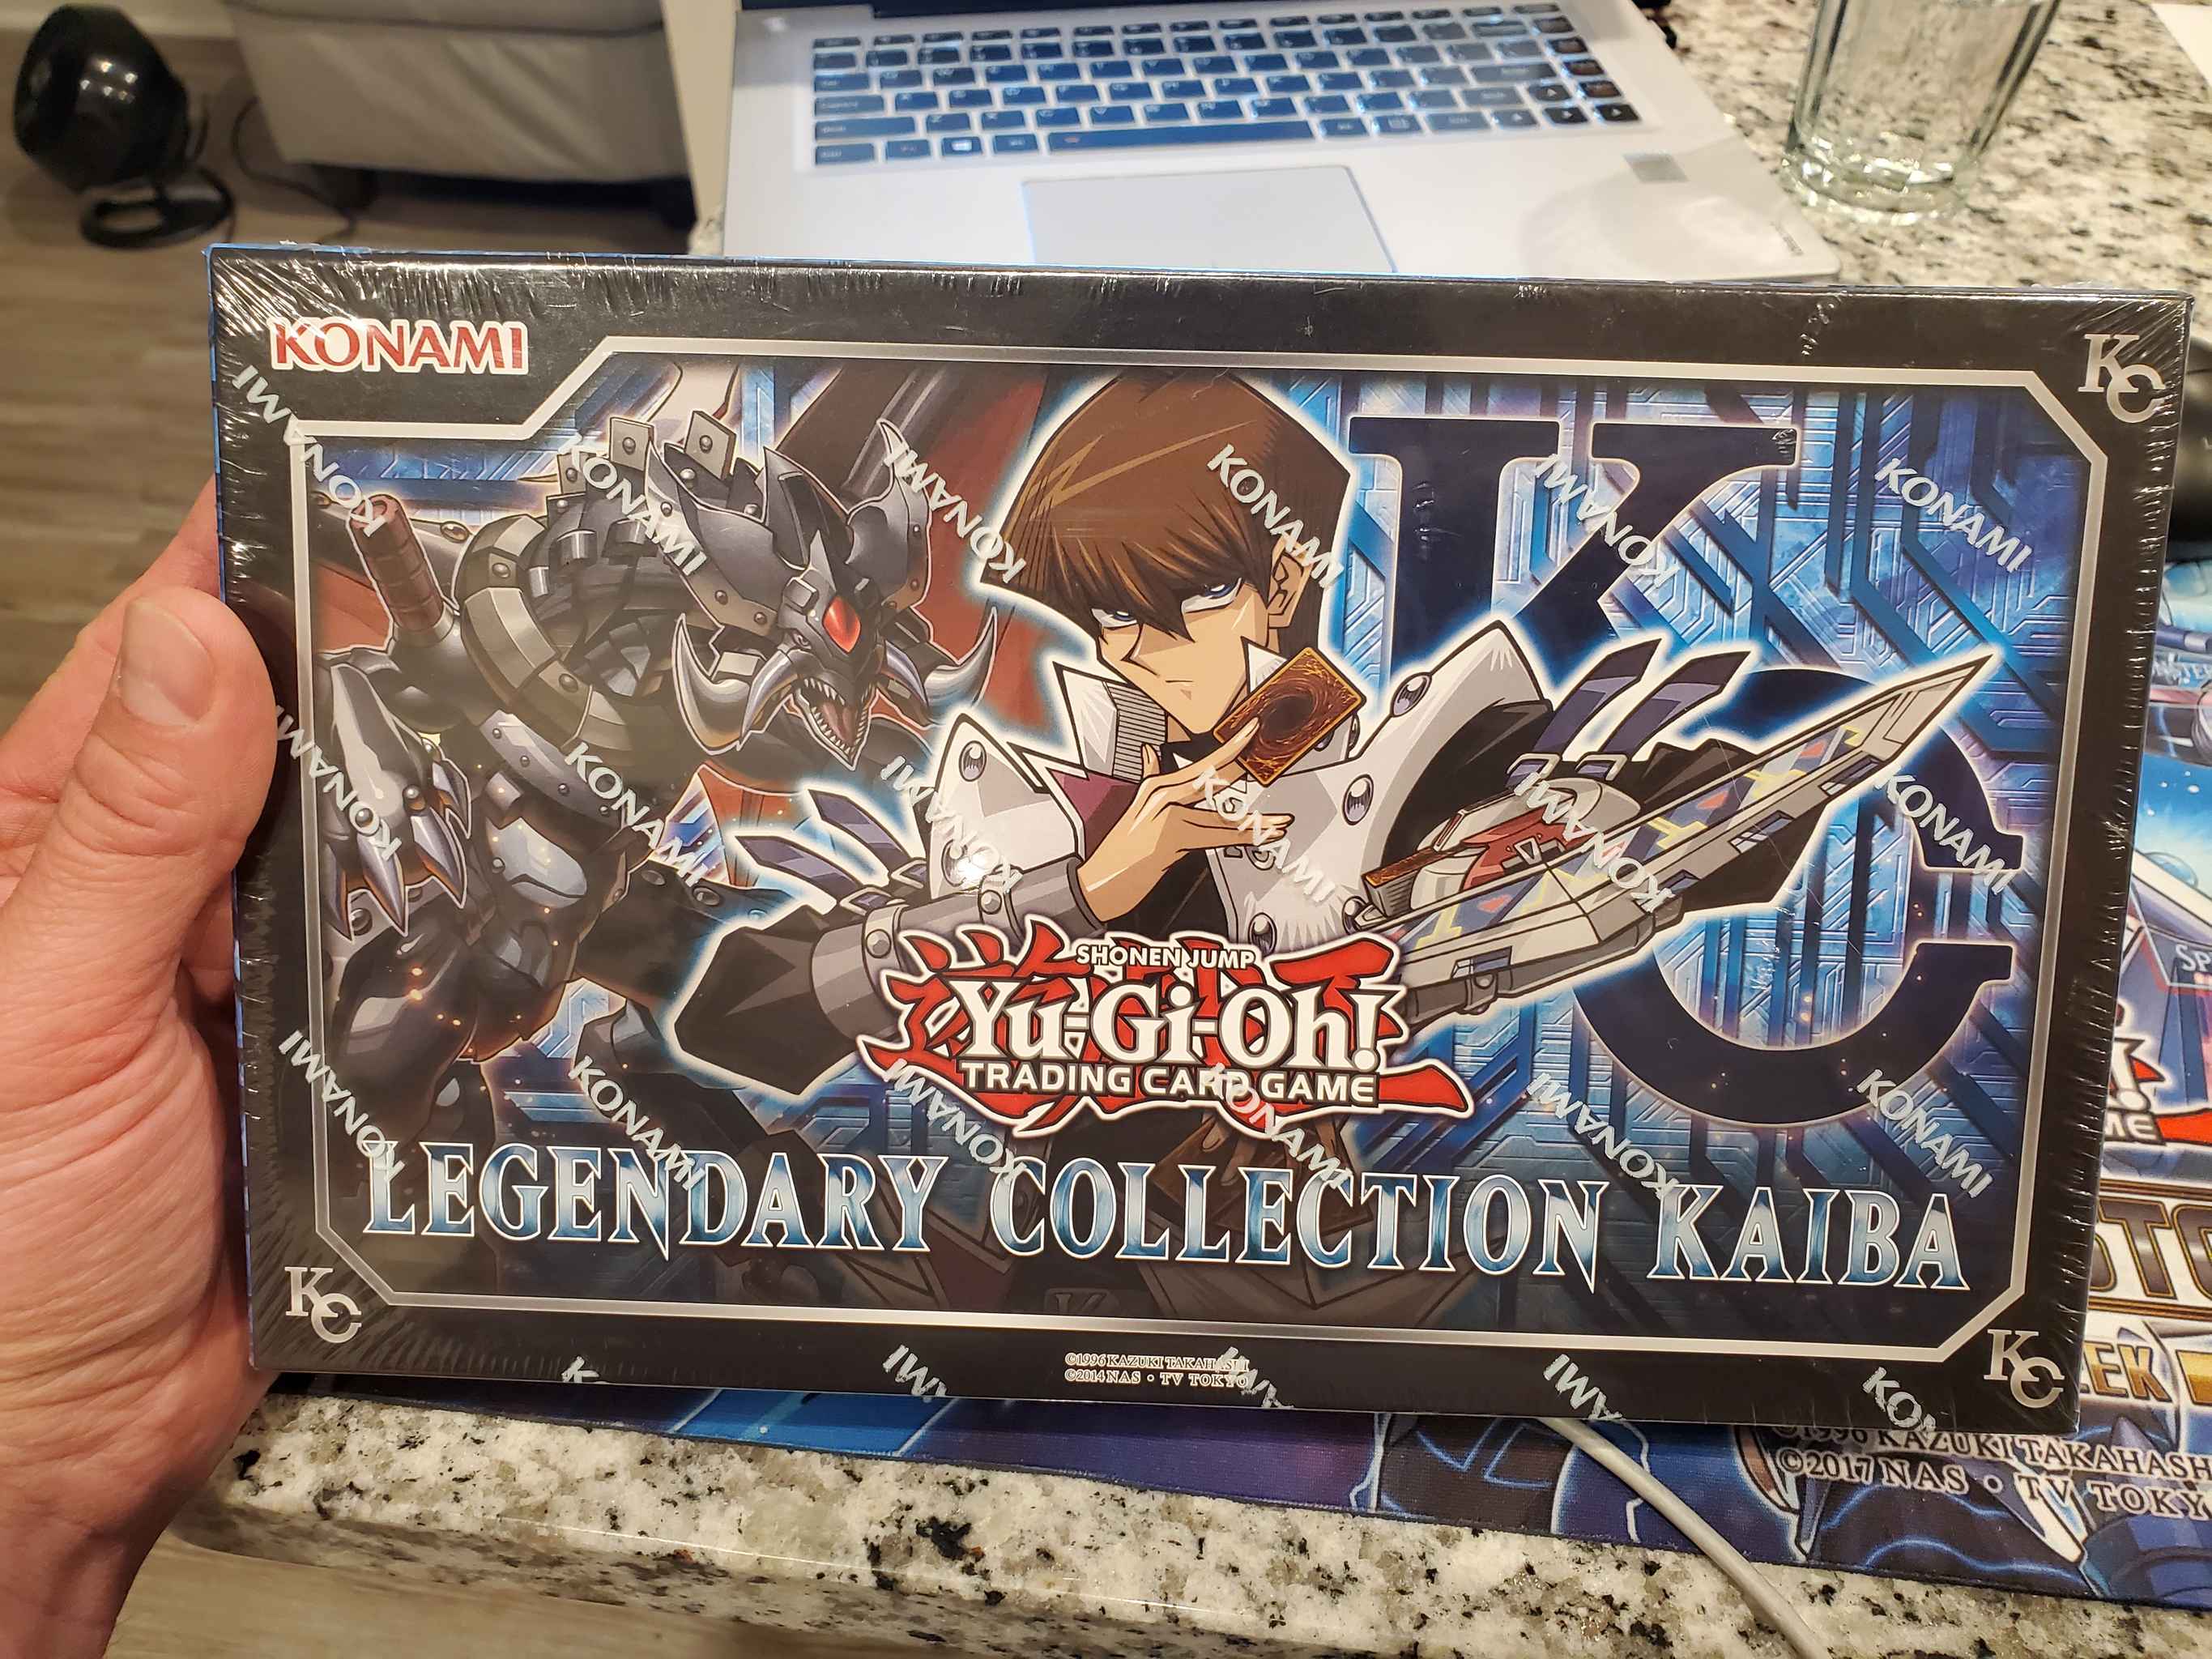 Legendary Collection Kaiba Yugioh Cards Konami for sale online 1st Ed 